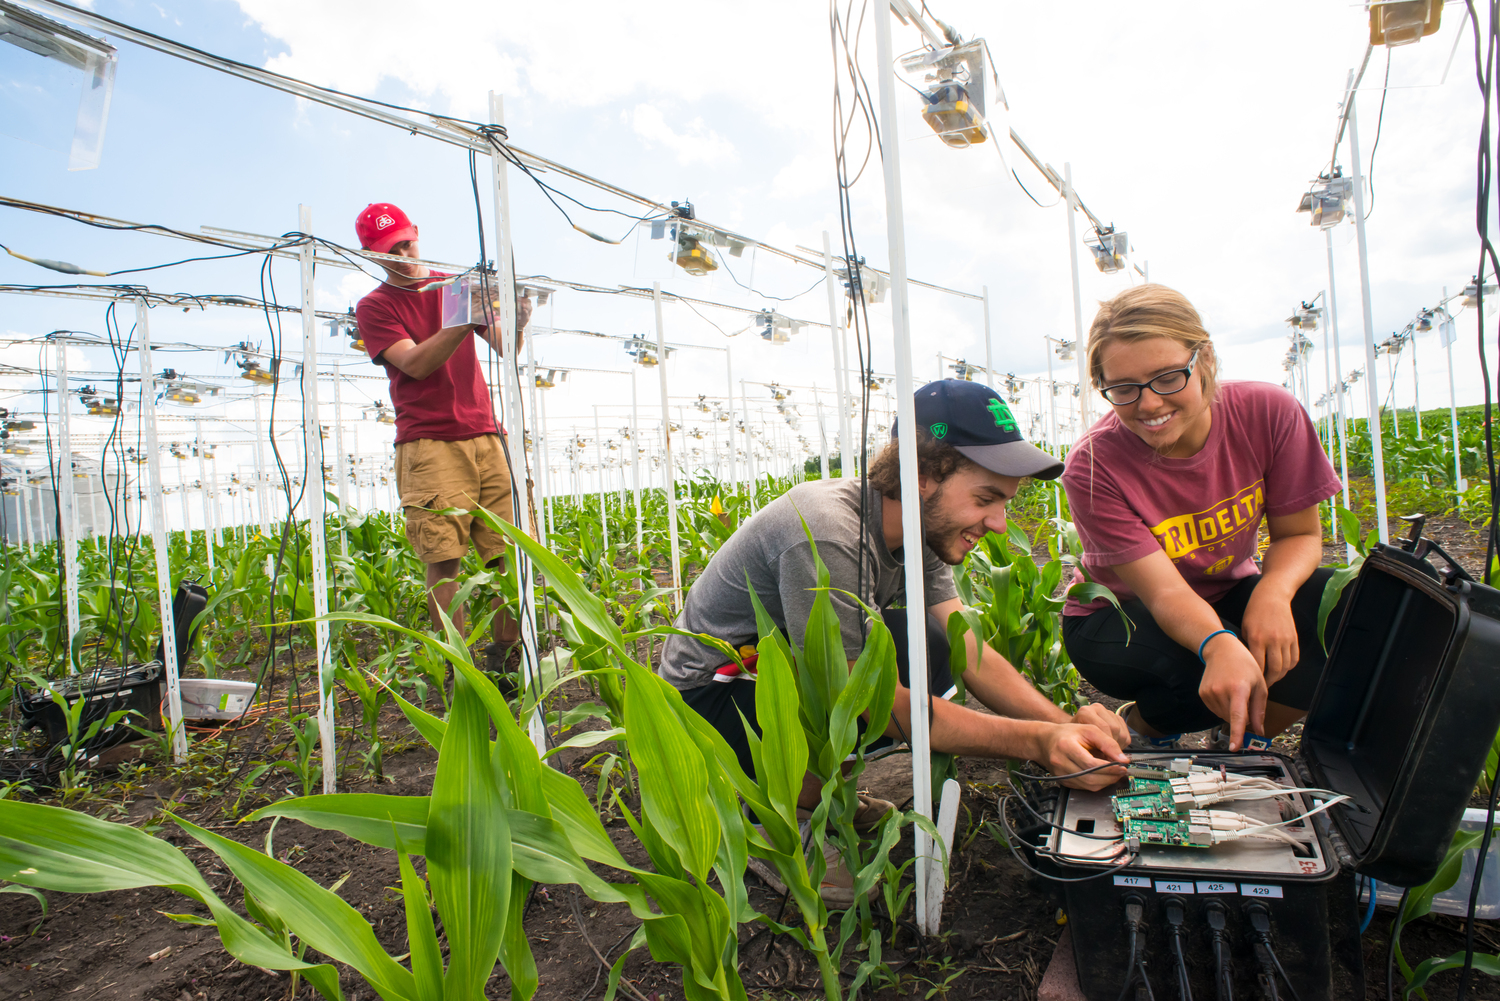 photo of 3 students installing rural broadband equipment in a corn field